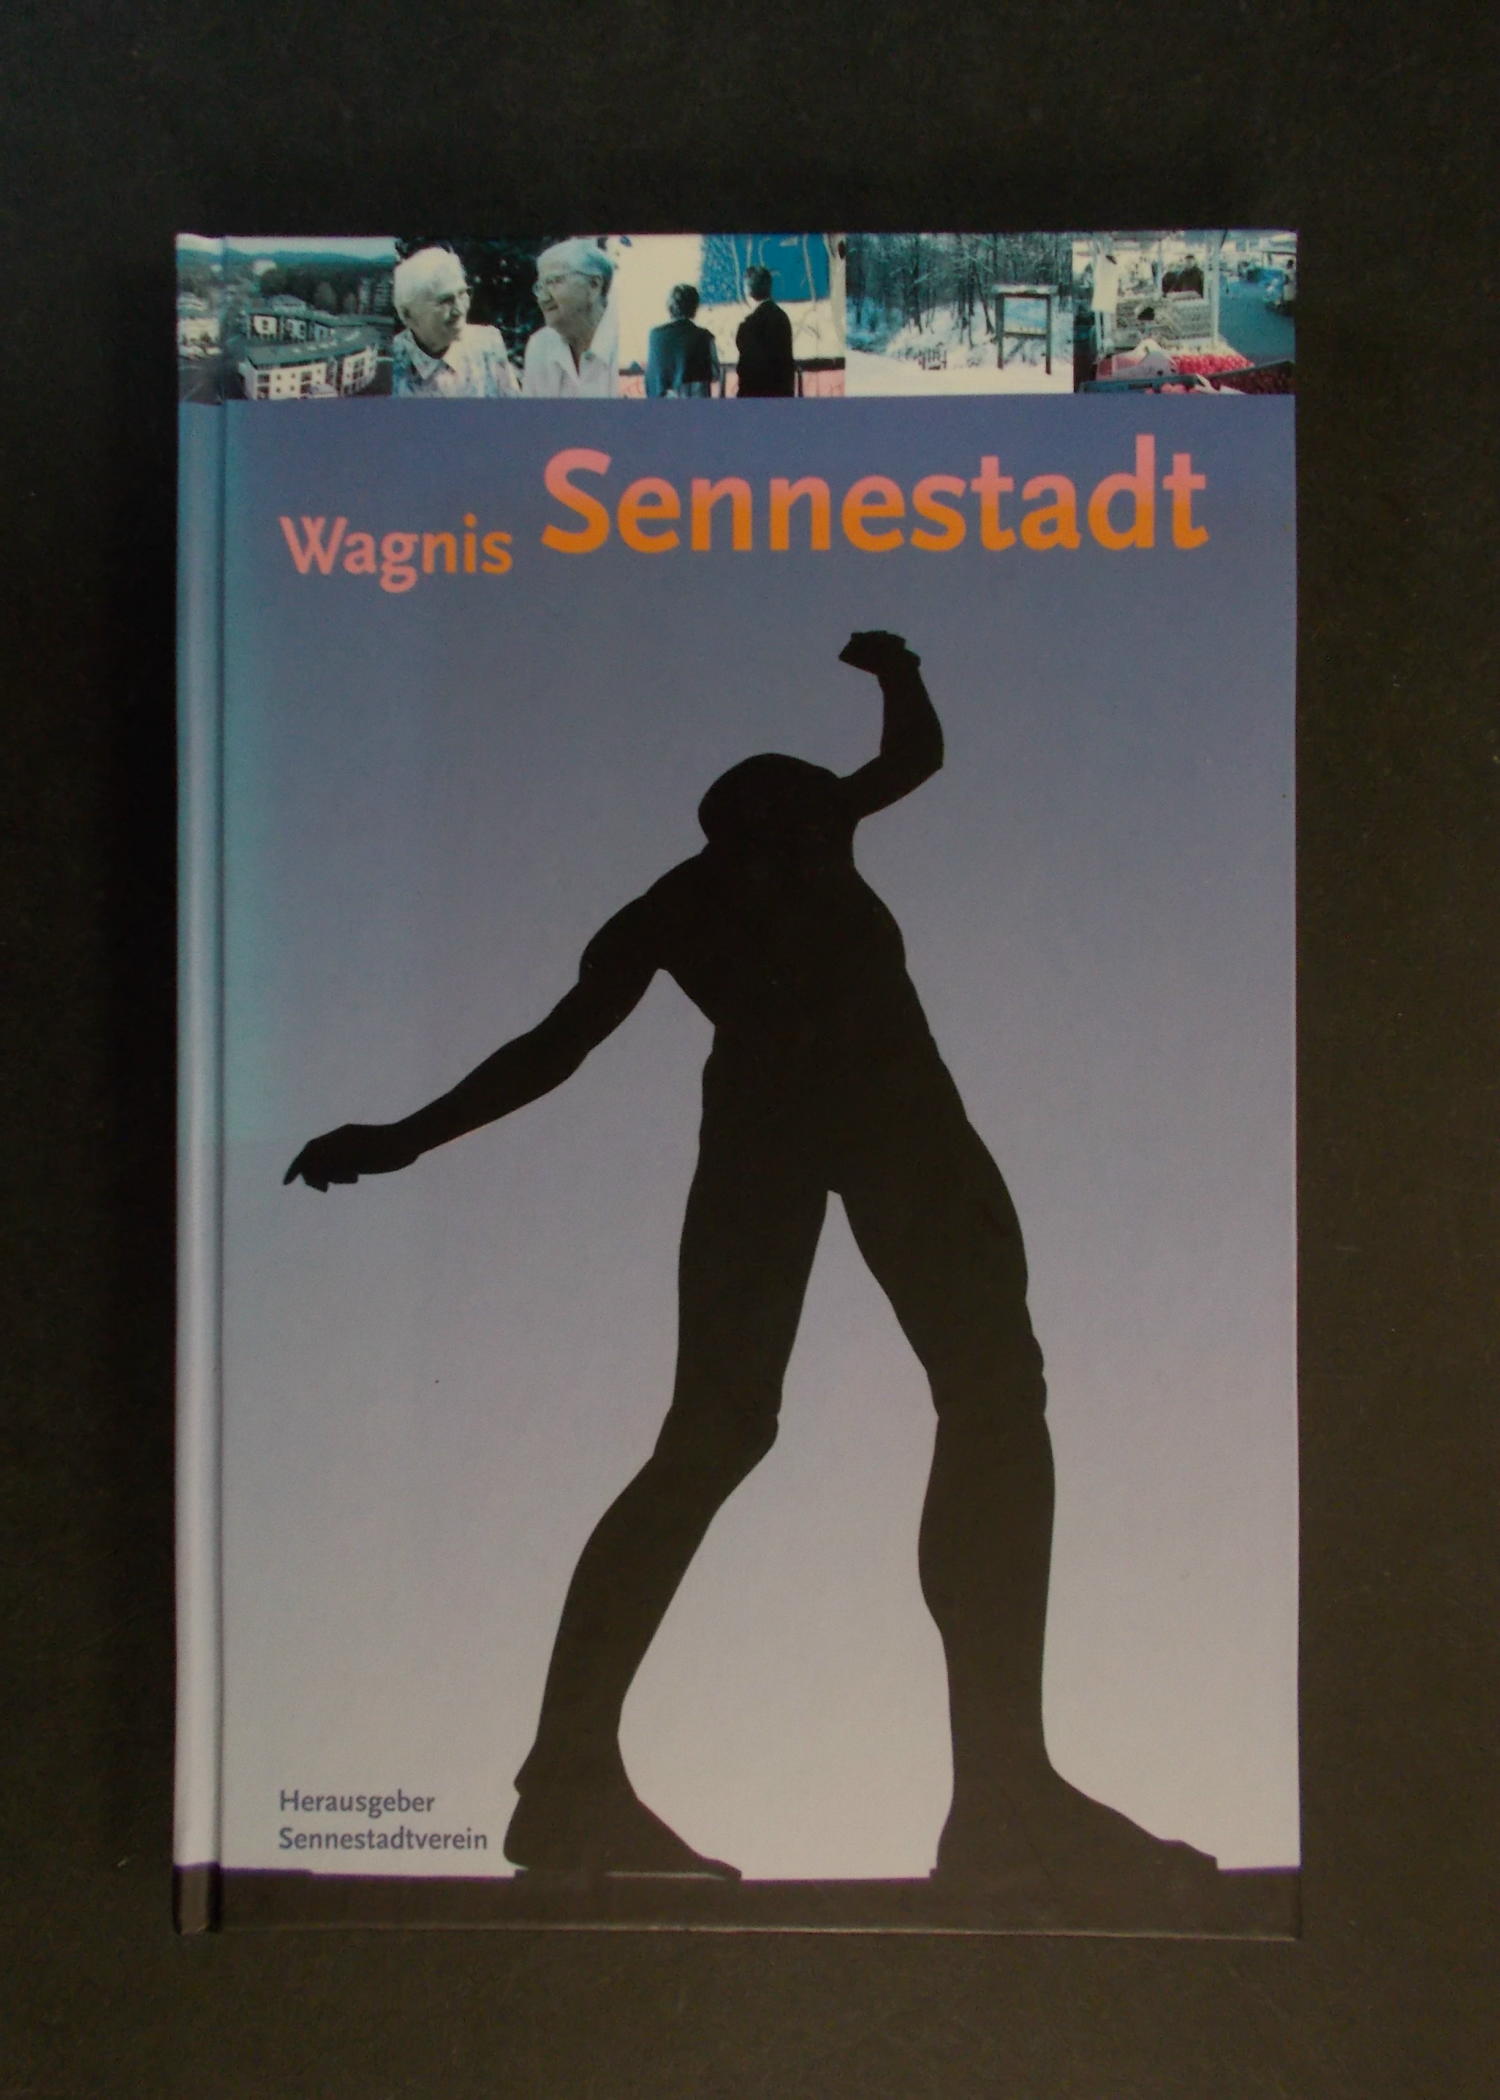 Wagnis Sennestadt - Sennestadtverein (Hg.)